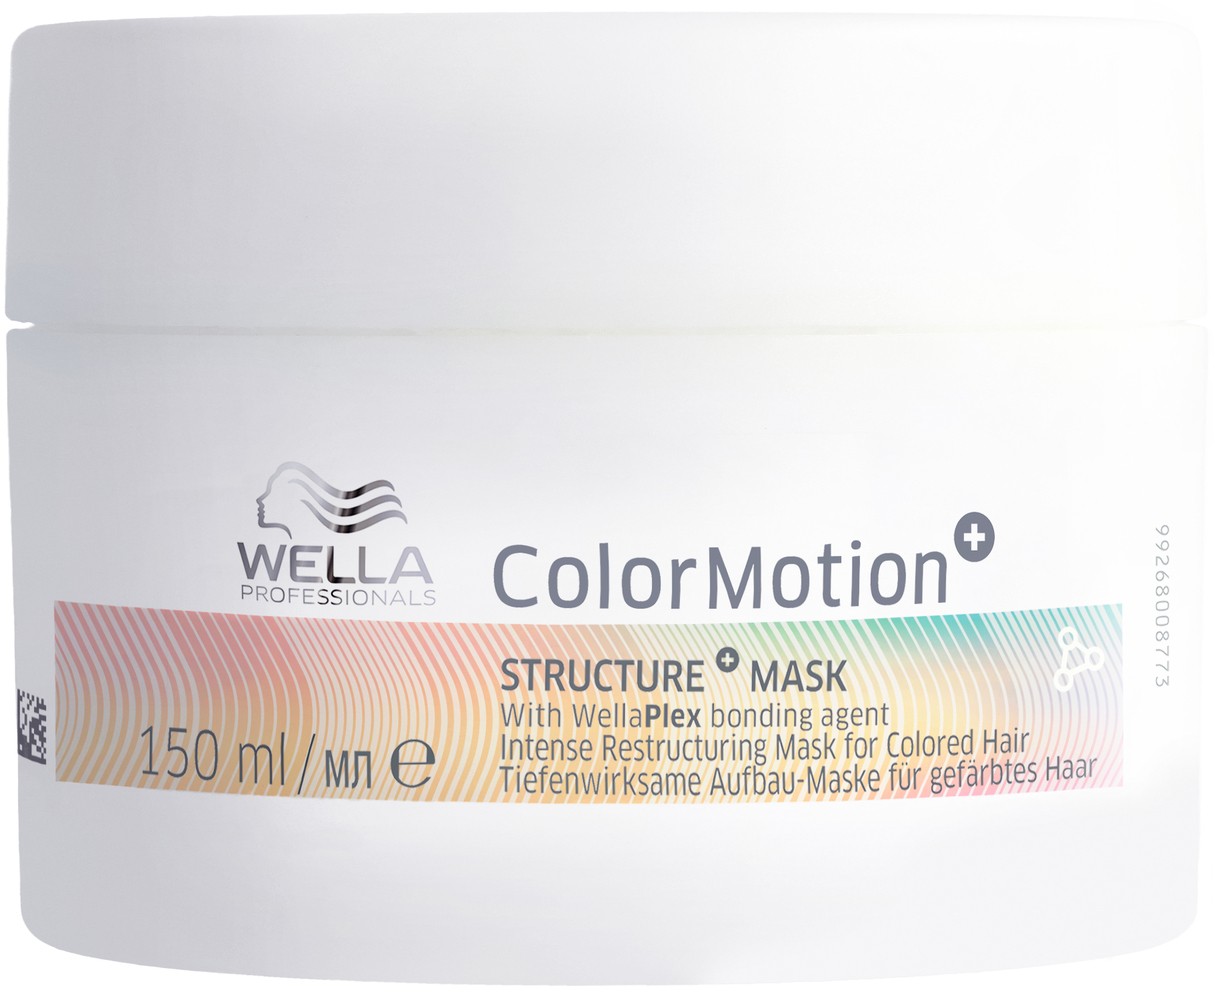  Wella ColorMotion Mask 150 ml 